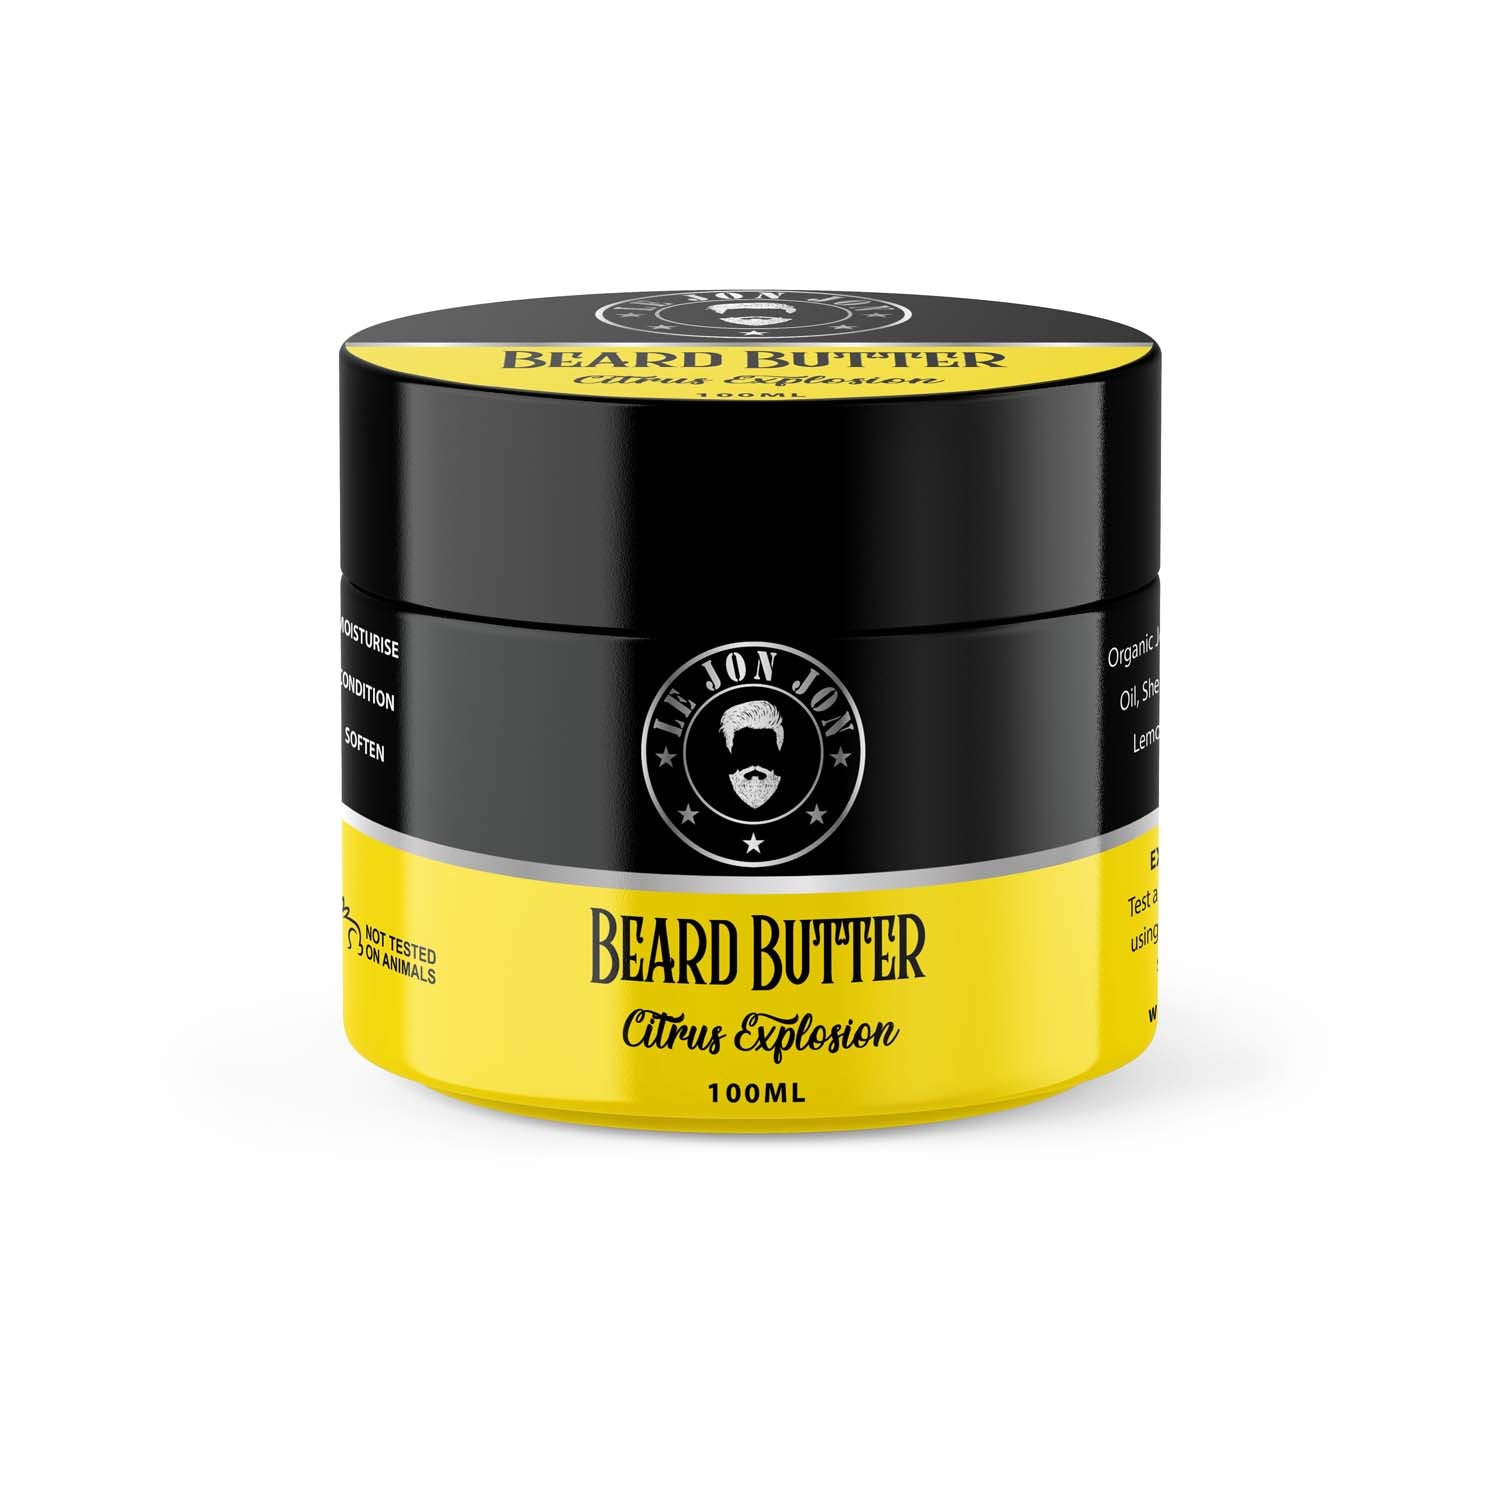 Lejonjon beard butter jar Citrus Explosion scented